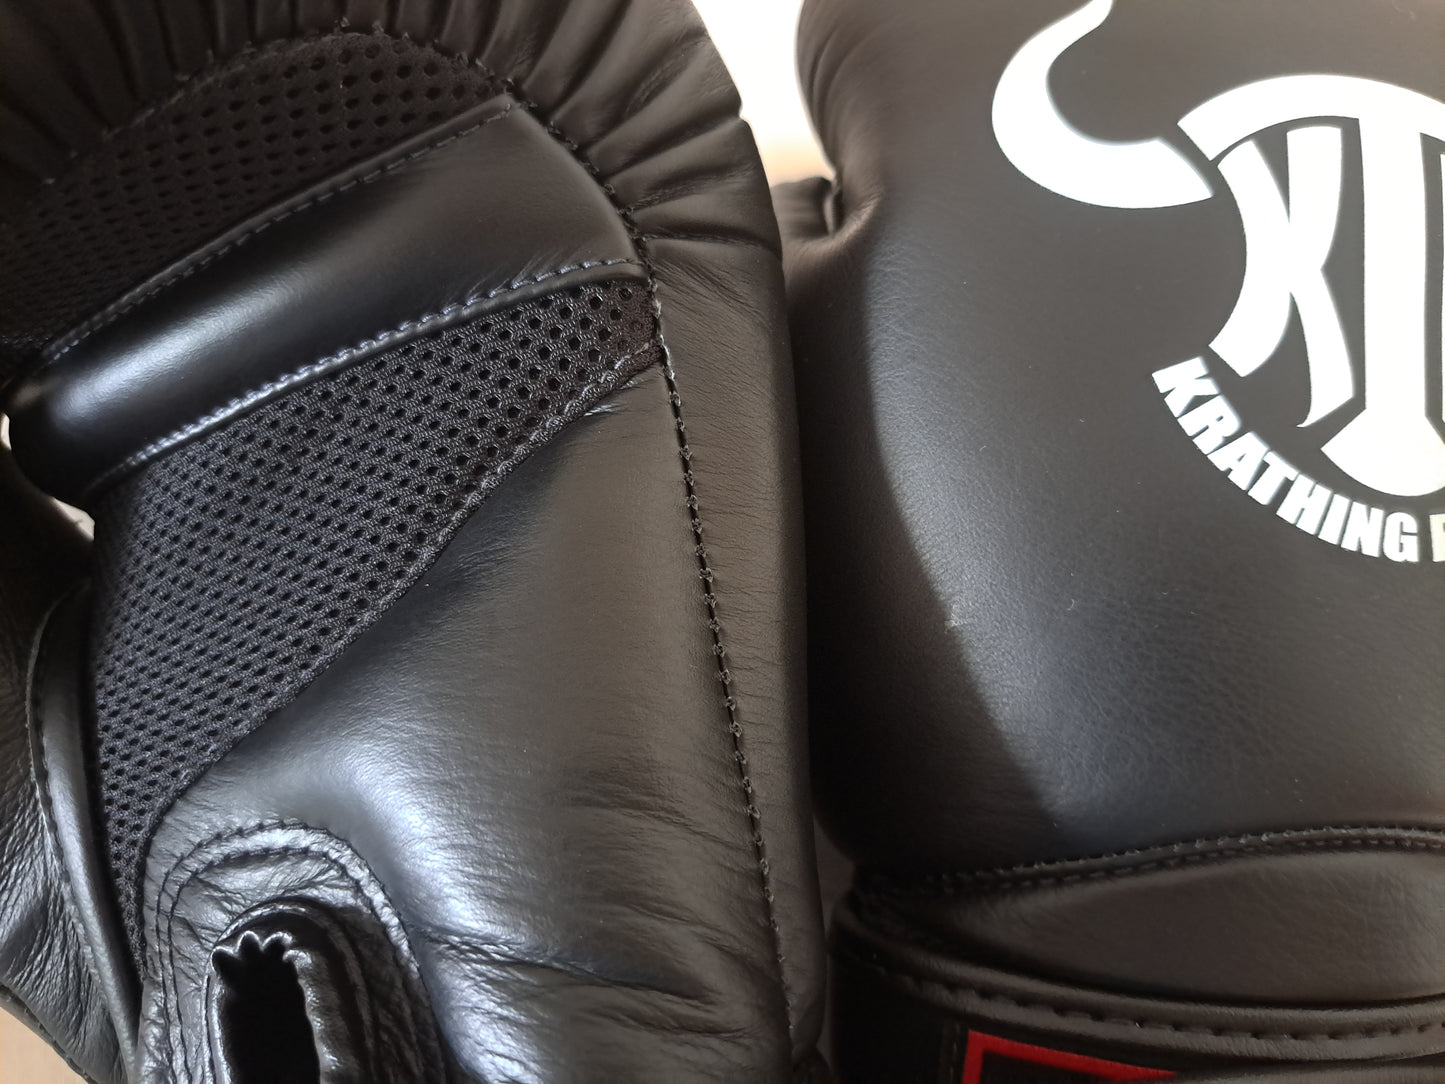 Krathing Thai Boxing Gloves - Leather - Black